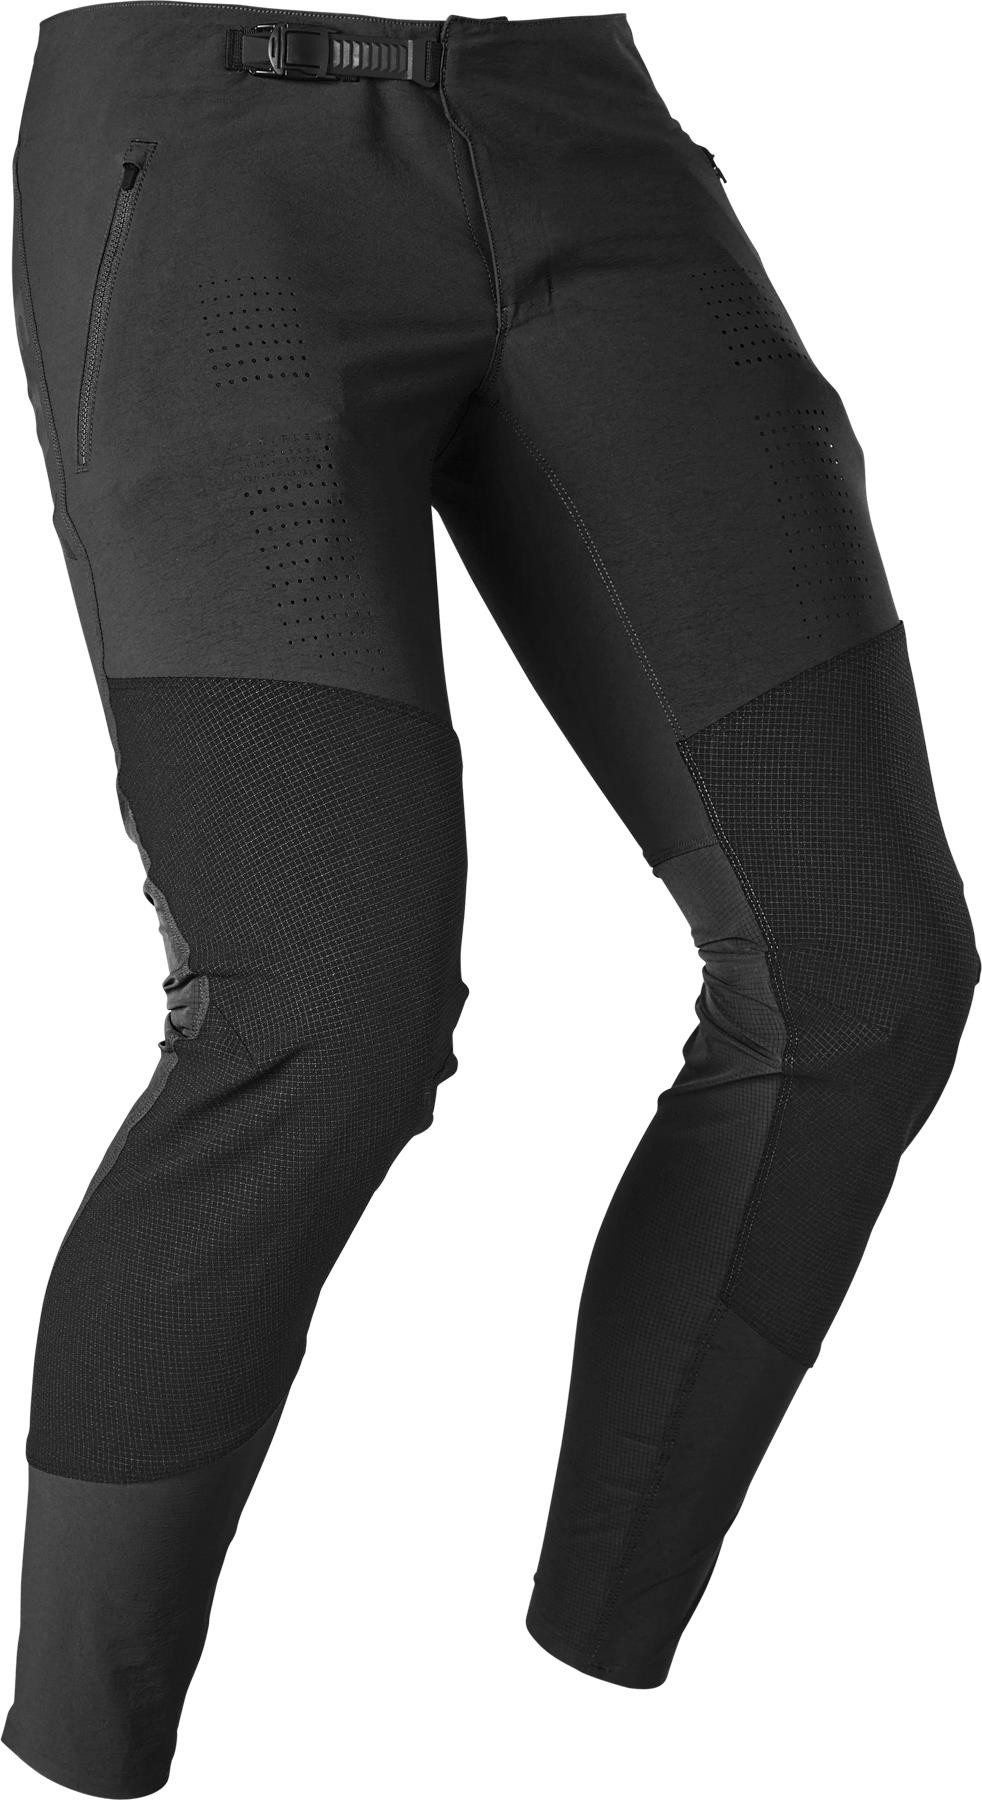 Flexair Pro MTB Cycling Trousers image 0